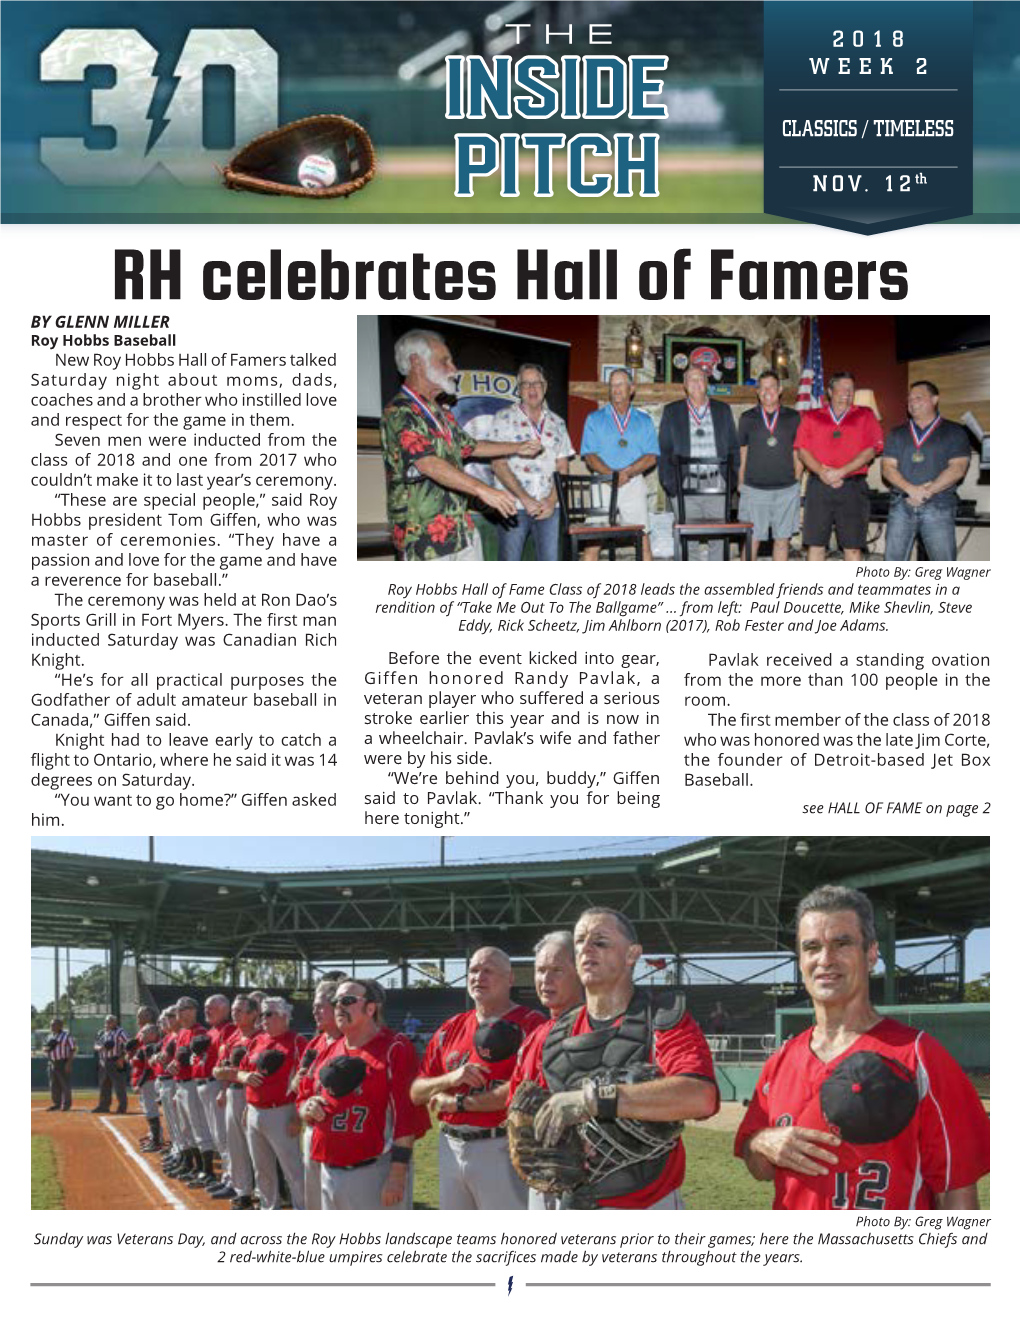 RH Celebrates Hall of Famers